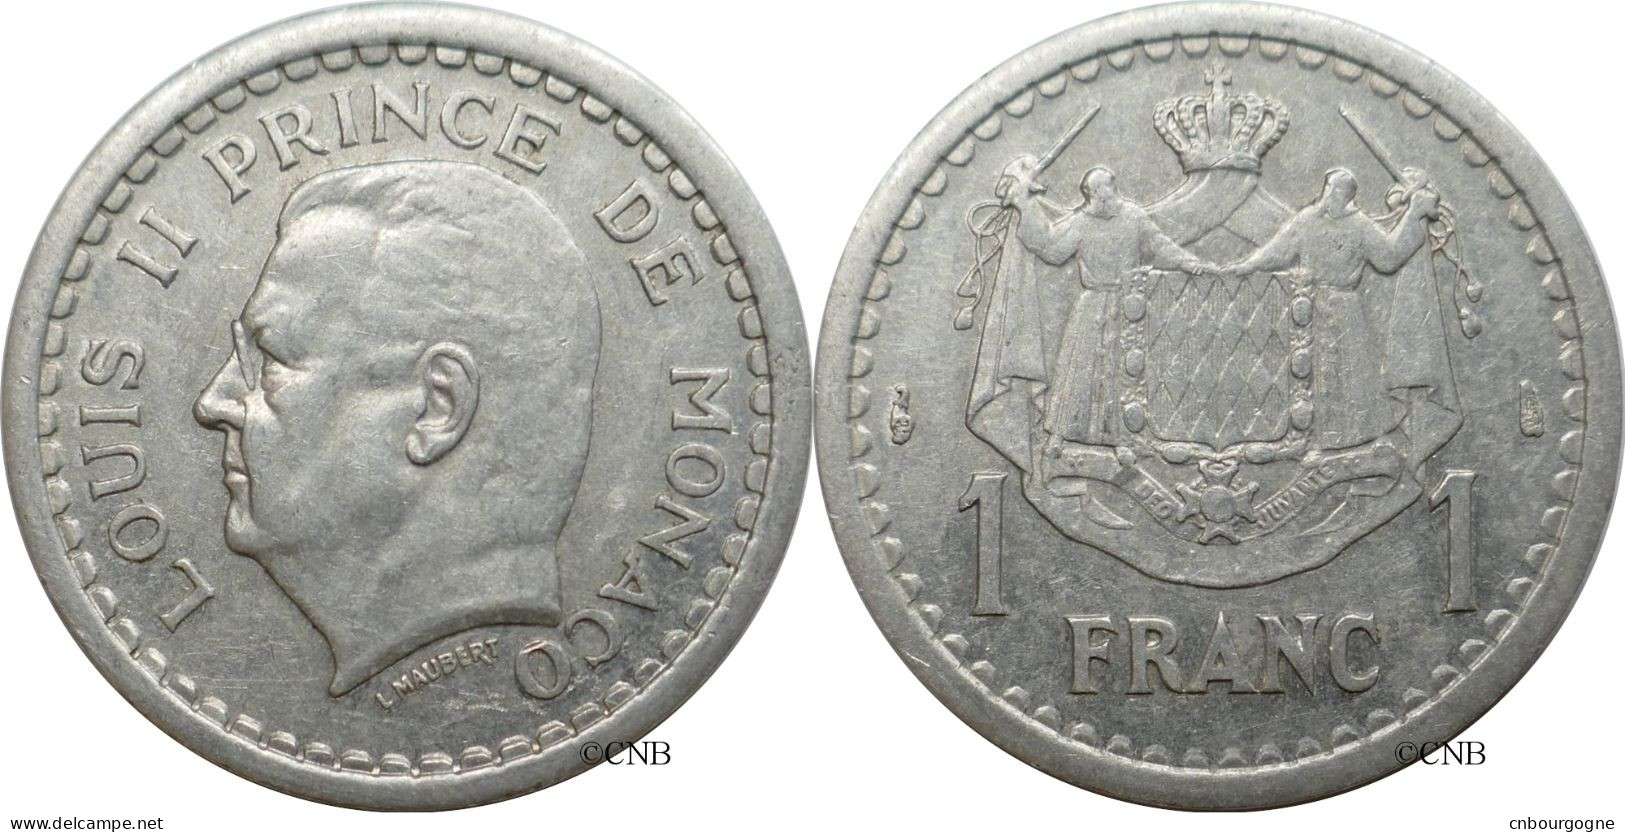 Monaco - Principauté - Louis II - 1 Franc ND (1943) - TTB/XF45 - Mon6519 - 1922-1949 Louis II.